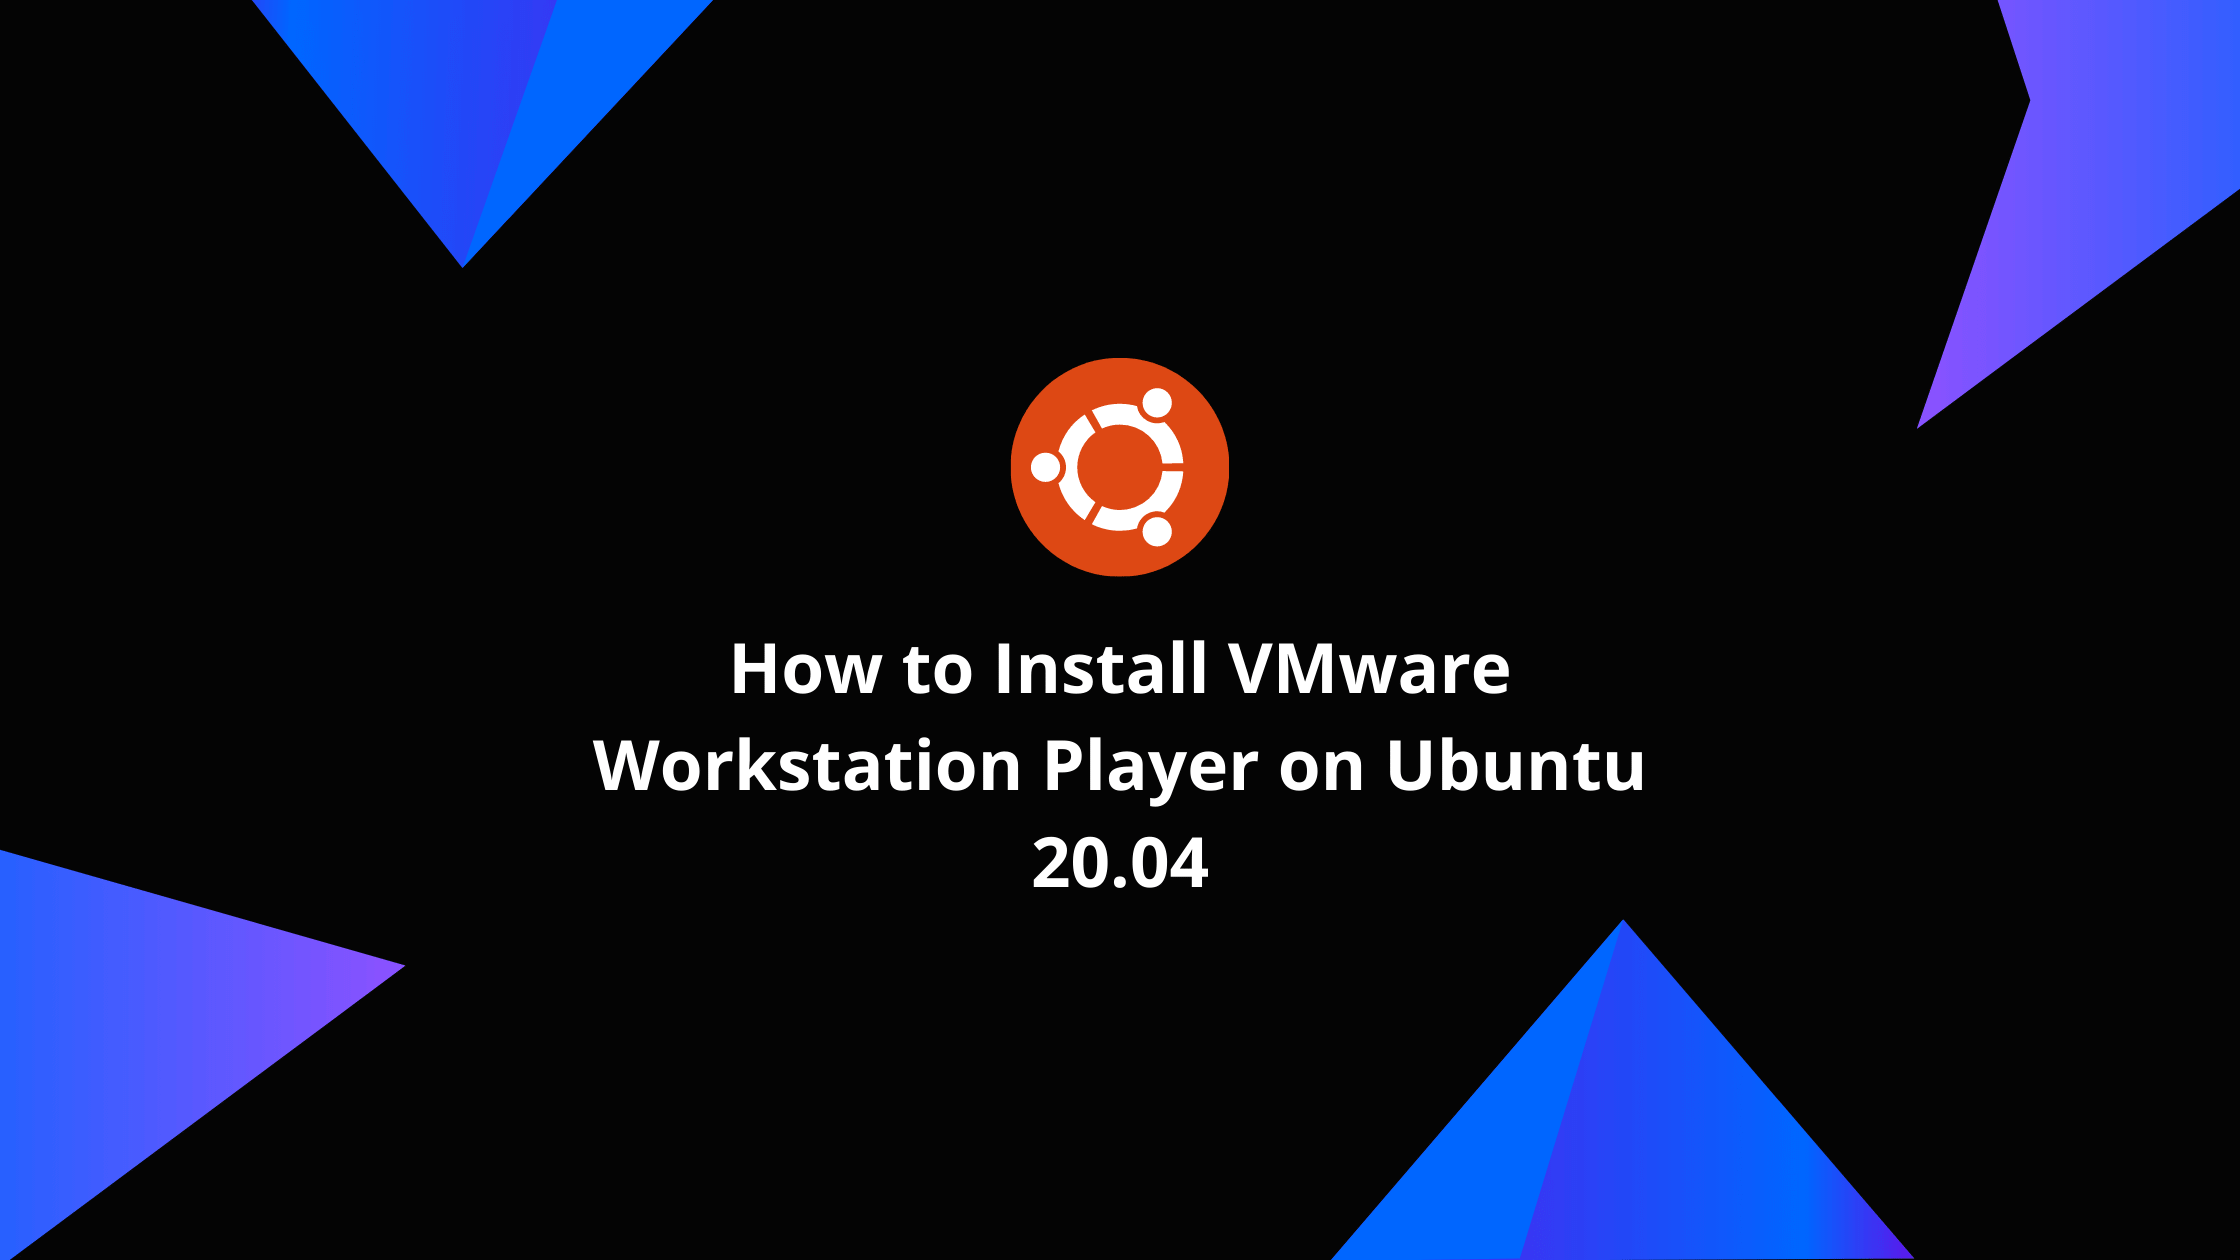 vmware workstation download for ubuntu 20.04